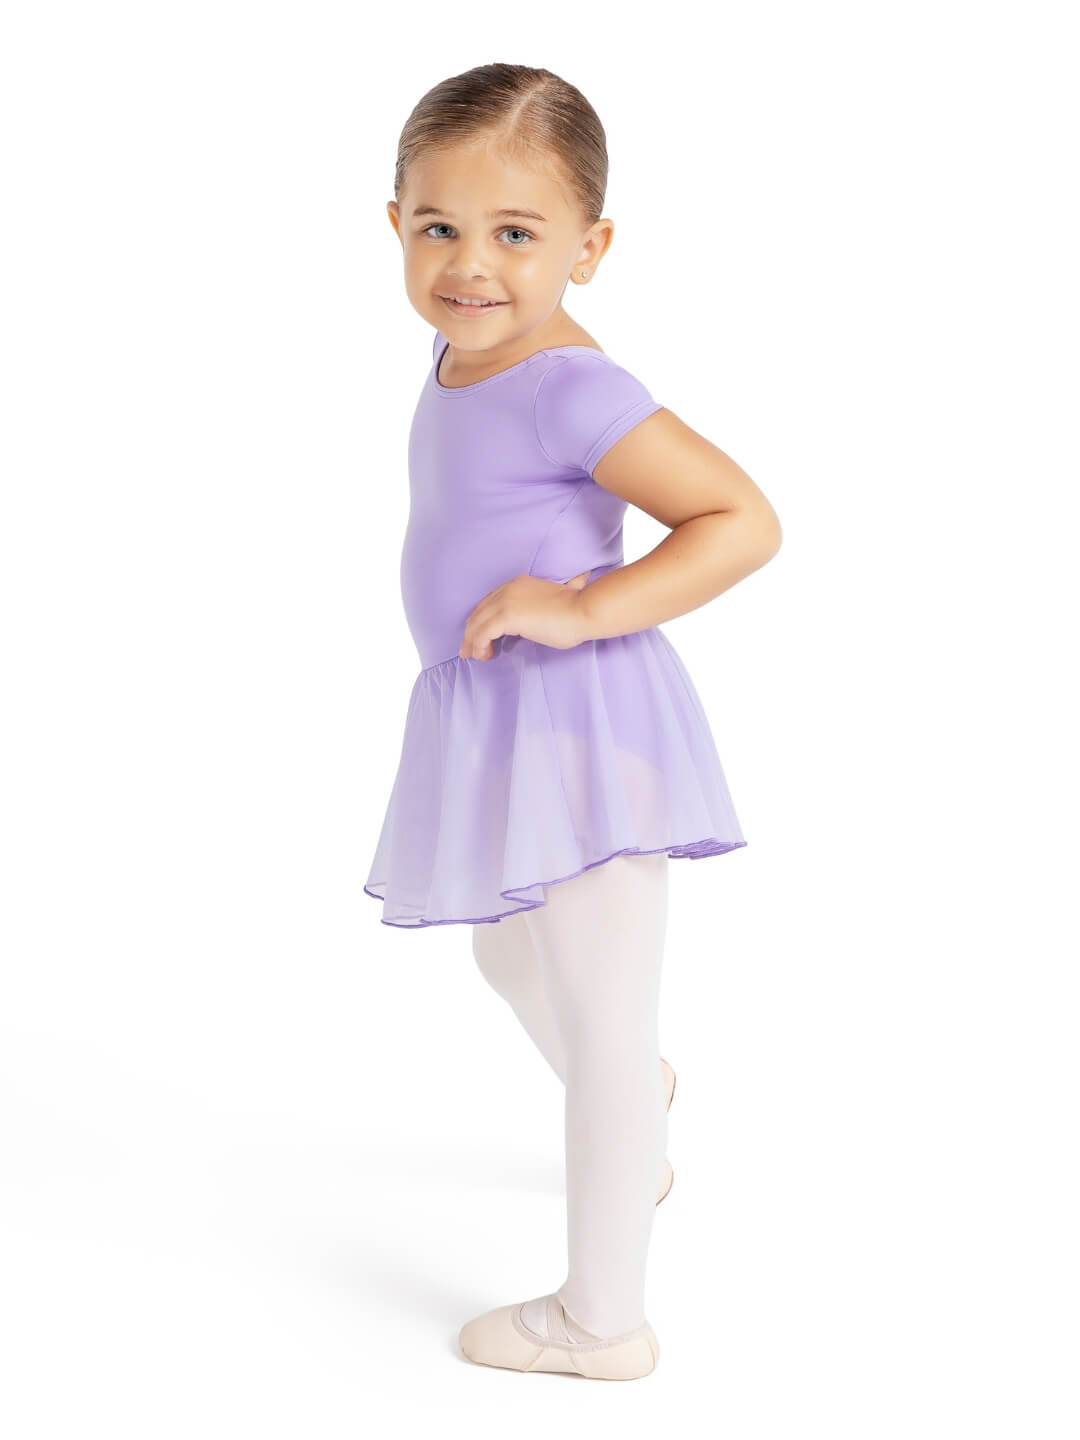 Capezio Short Sleeve Dress Child SE1037C